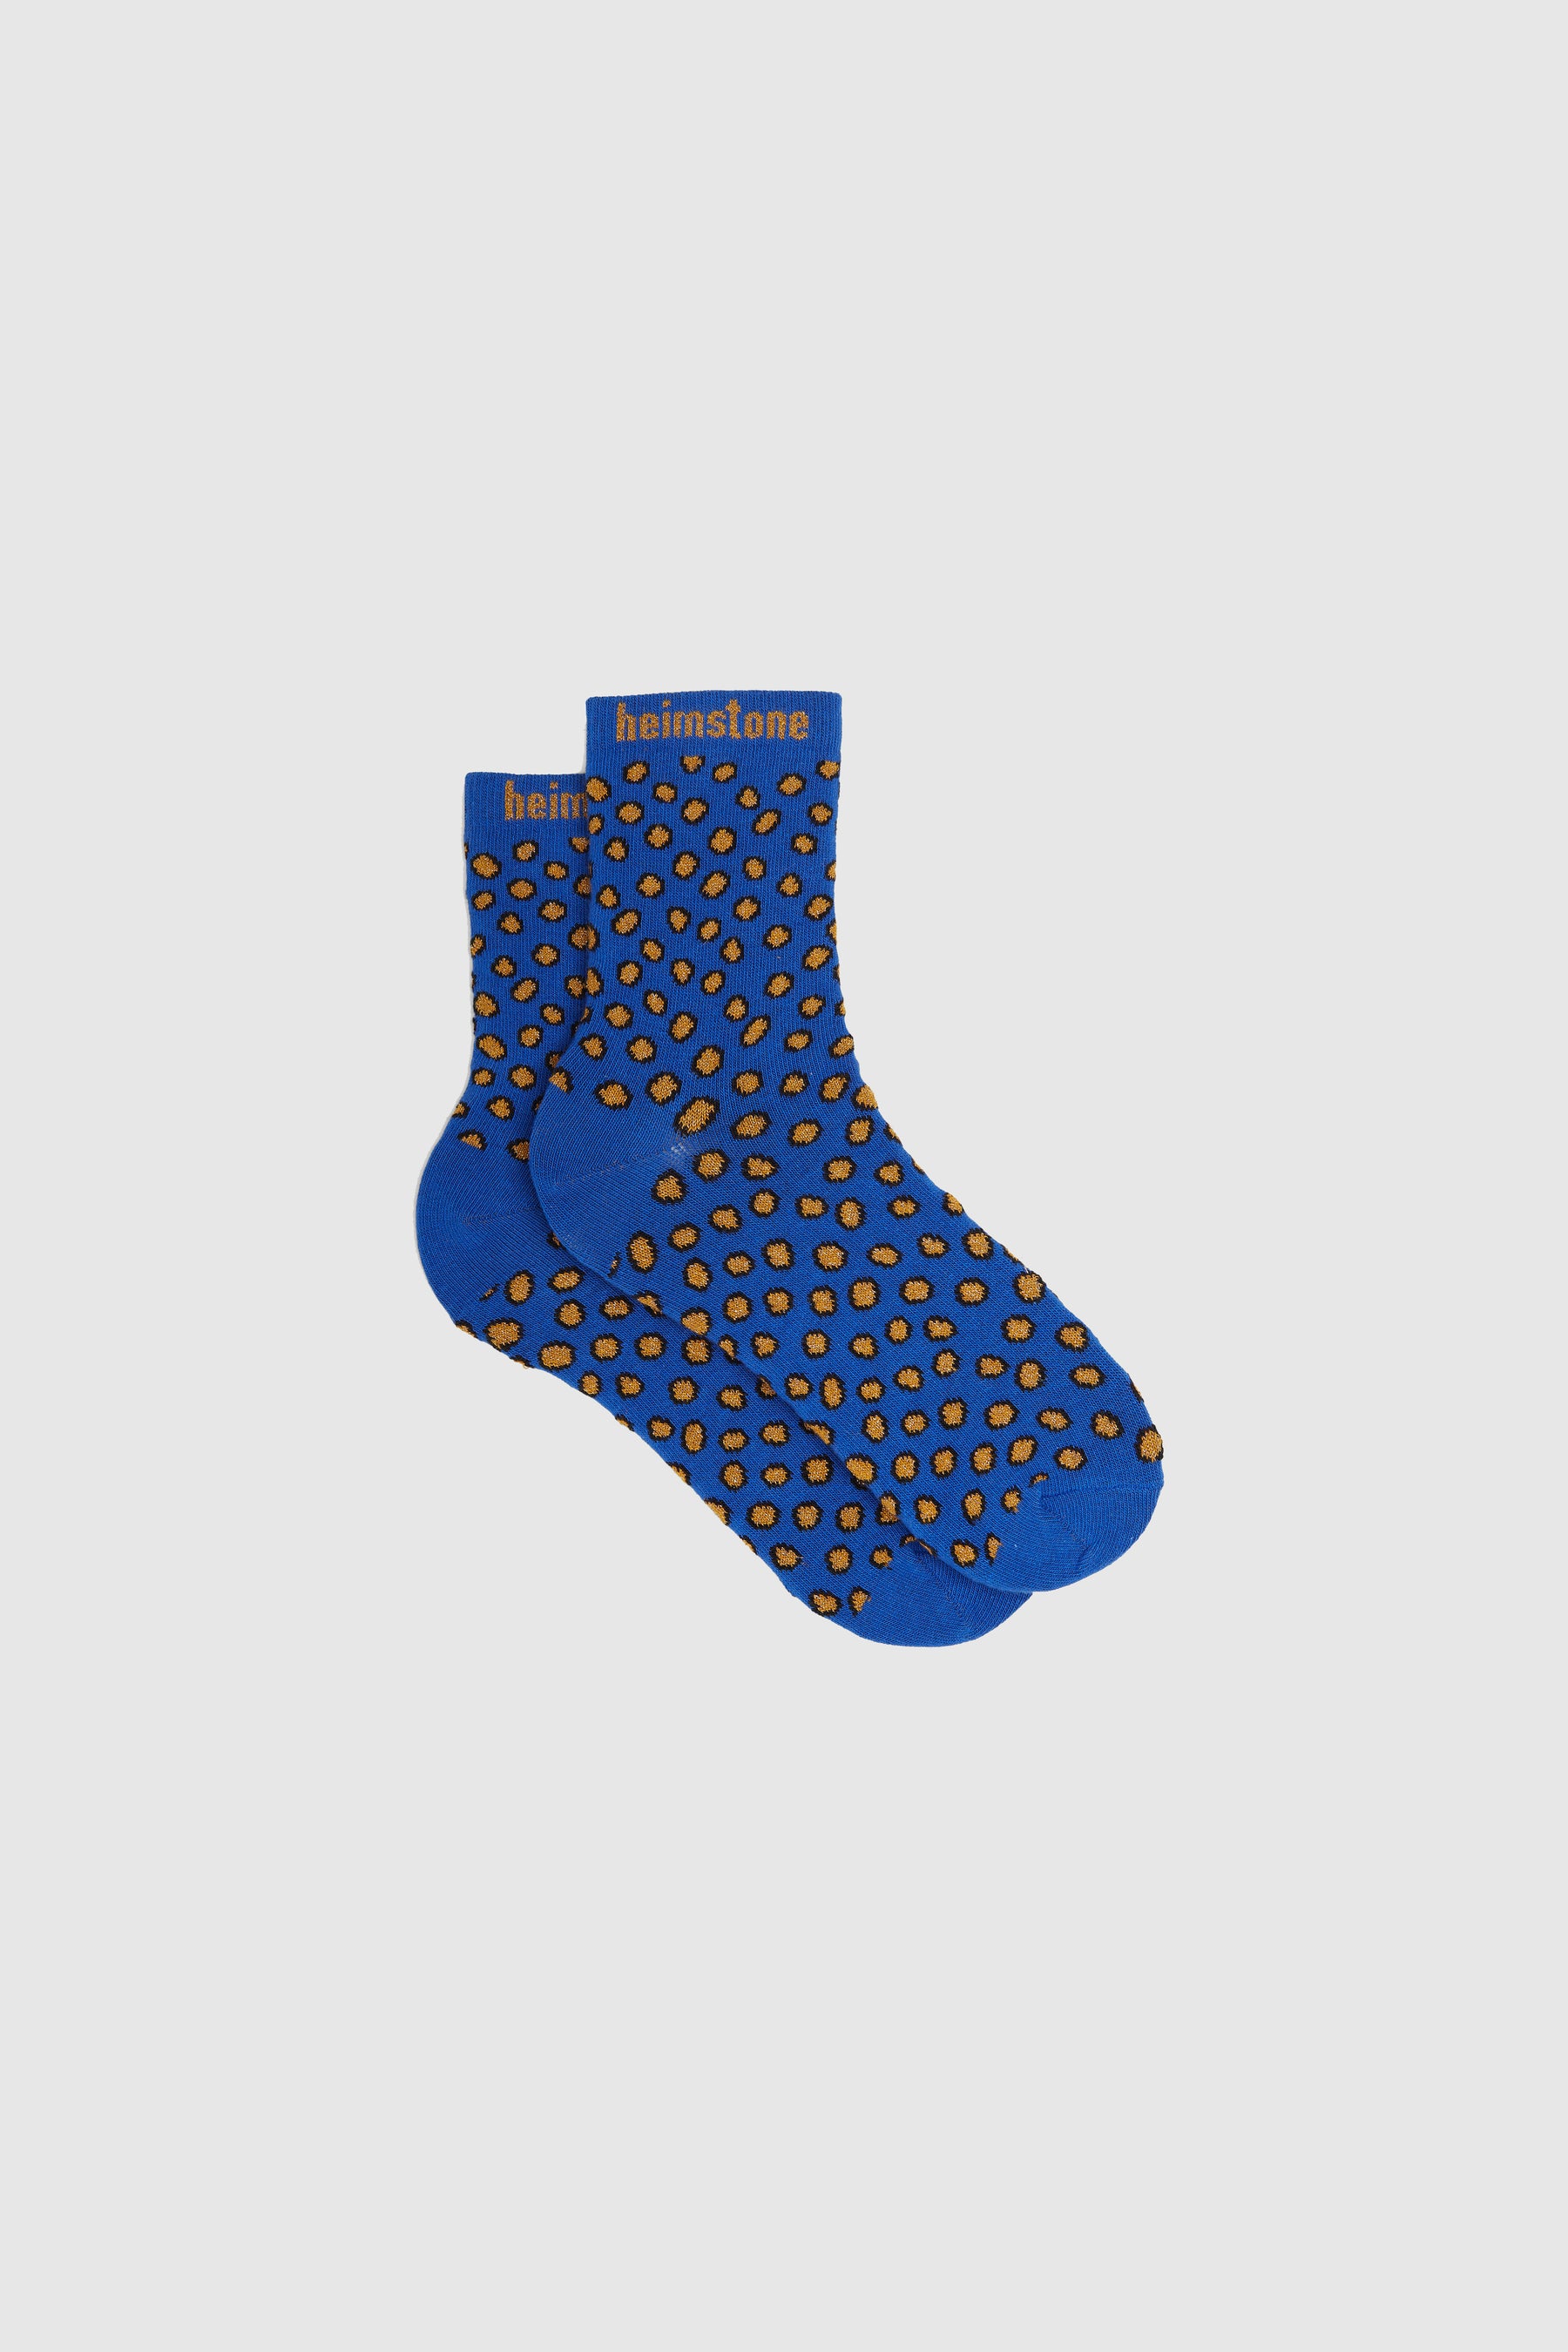 Knee socks in navy blue Messy Dots print